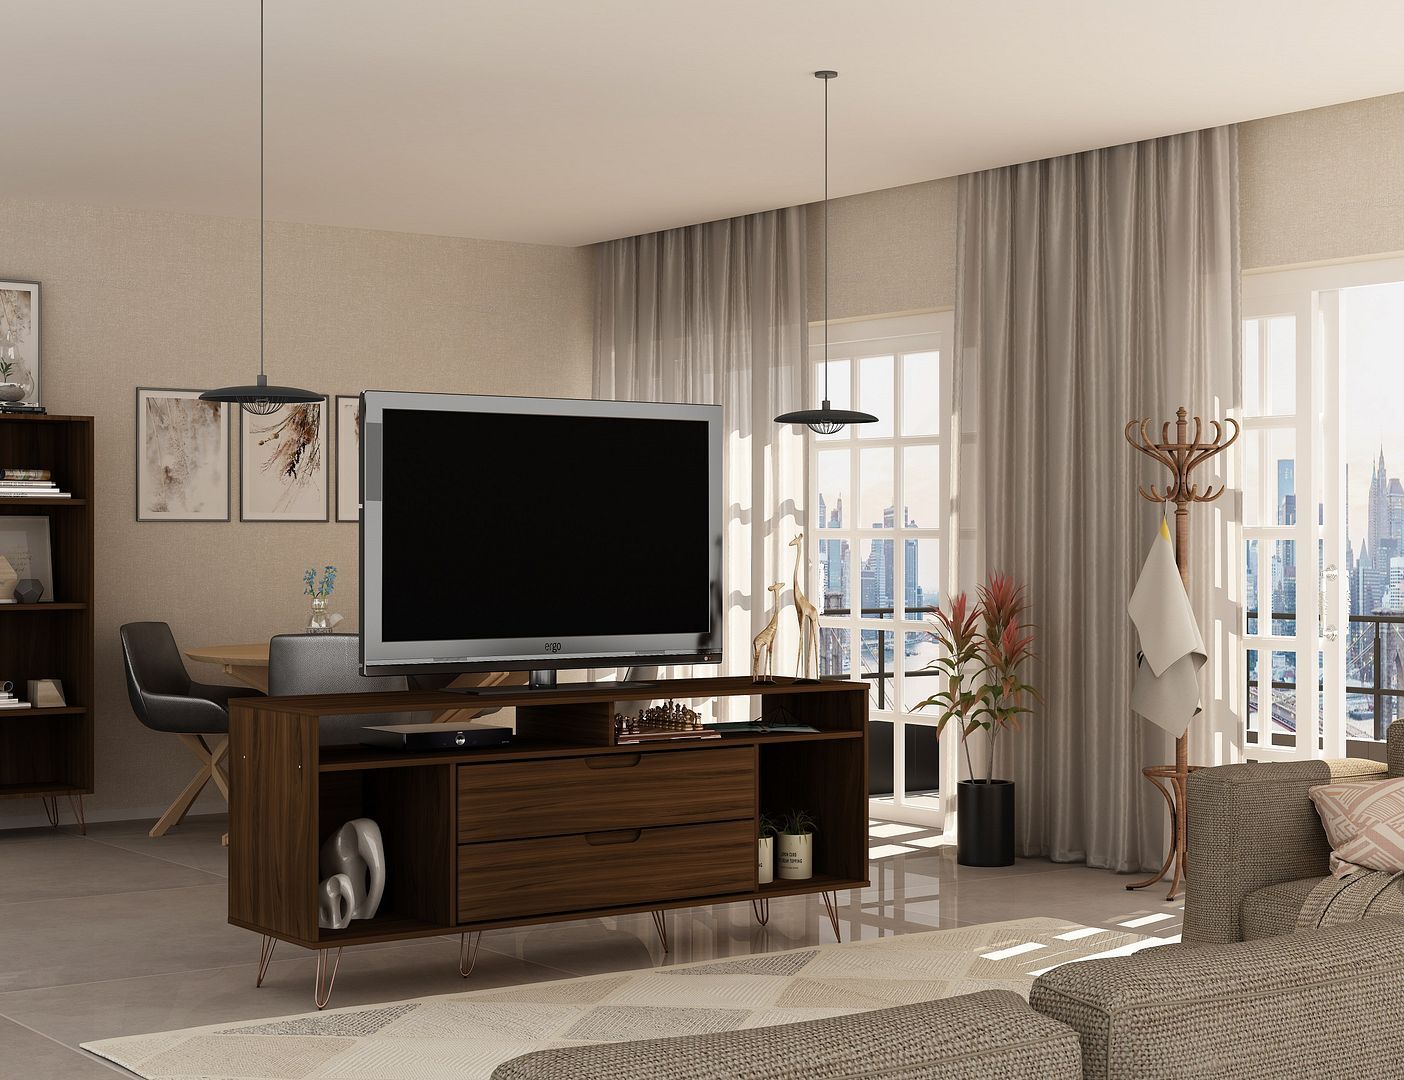 Rockefeller 7-Piece Bedroom Set - East Shore Modern Home Furnishings